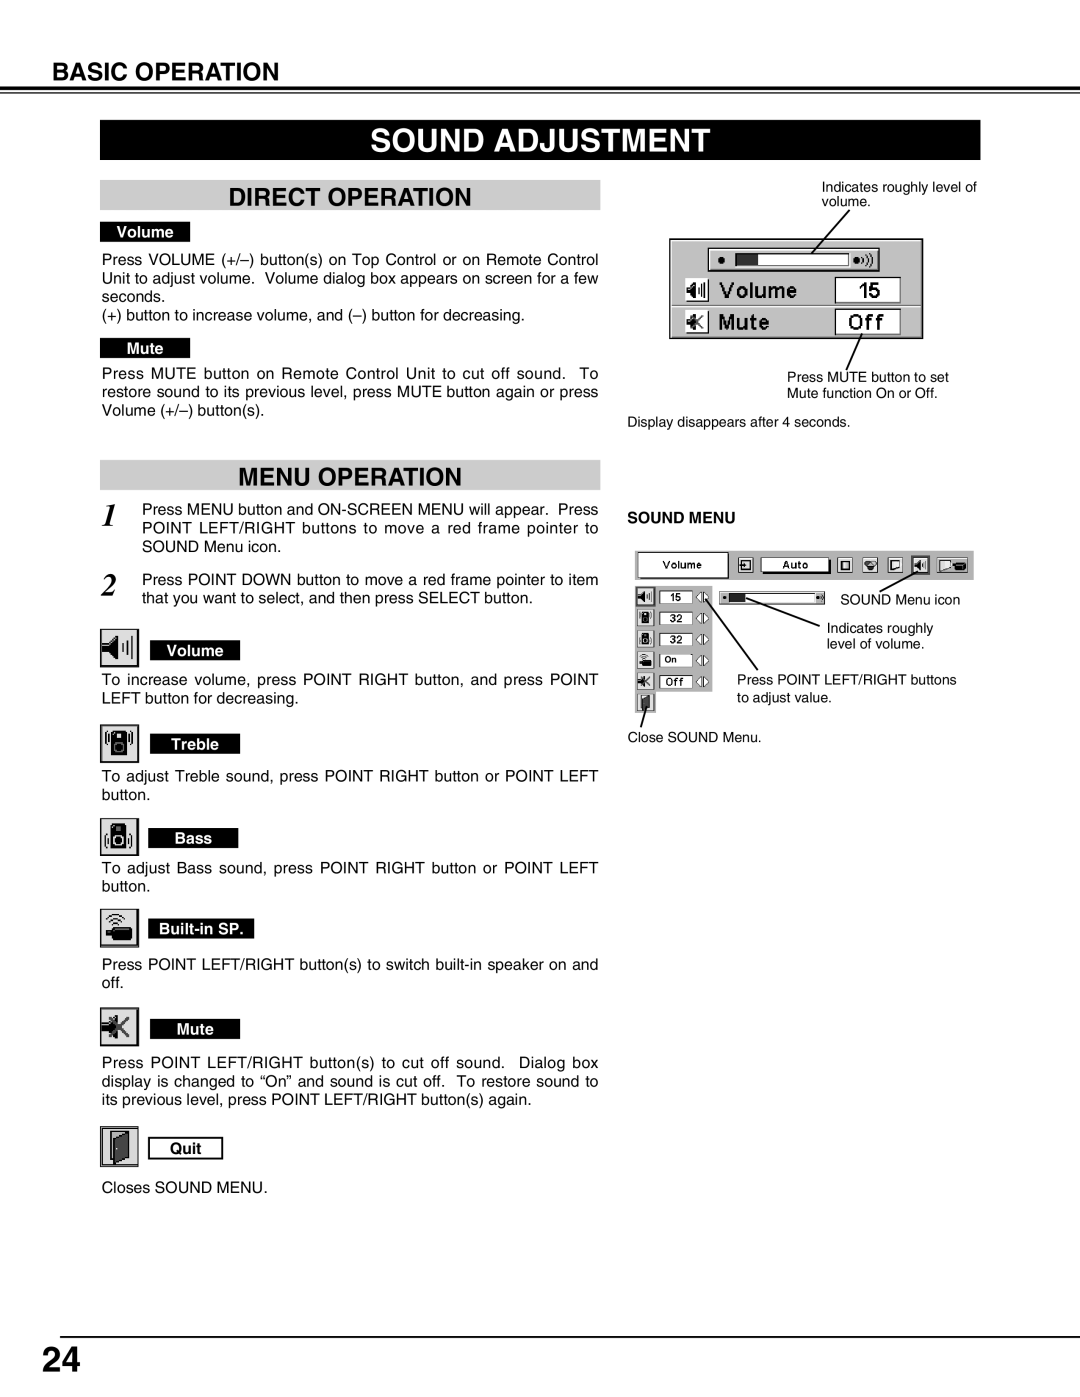 Christie Digital Systems 38-MX2001-01 user manual Sound Adjustment, Direct Operation, Menu Operation, Basic Operation, Quit 